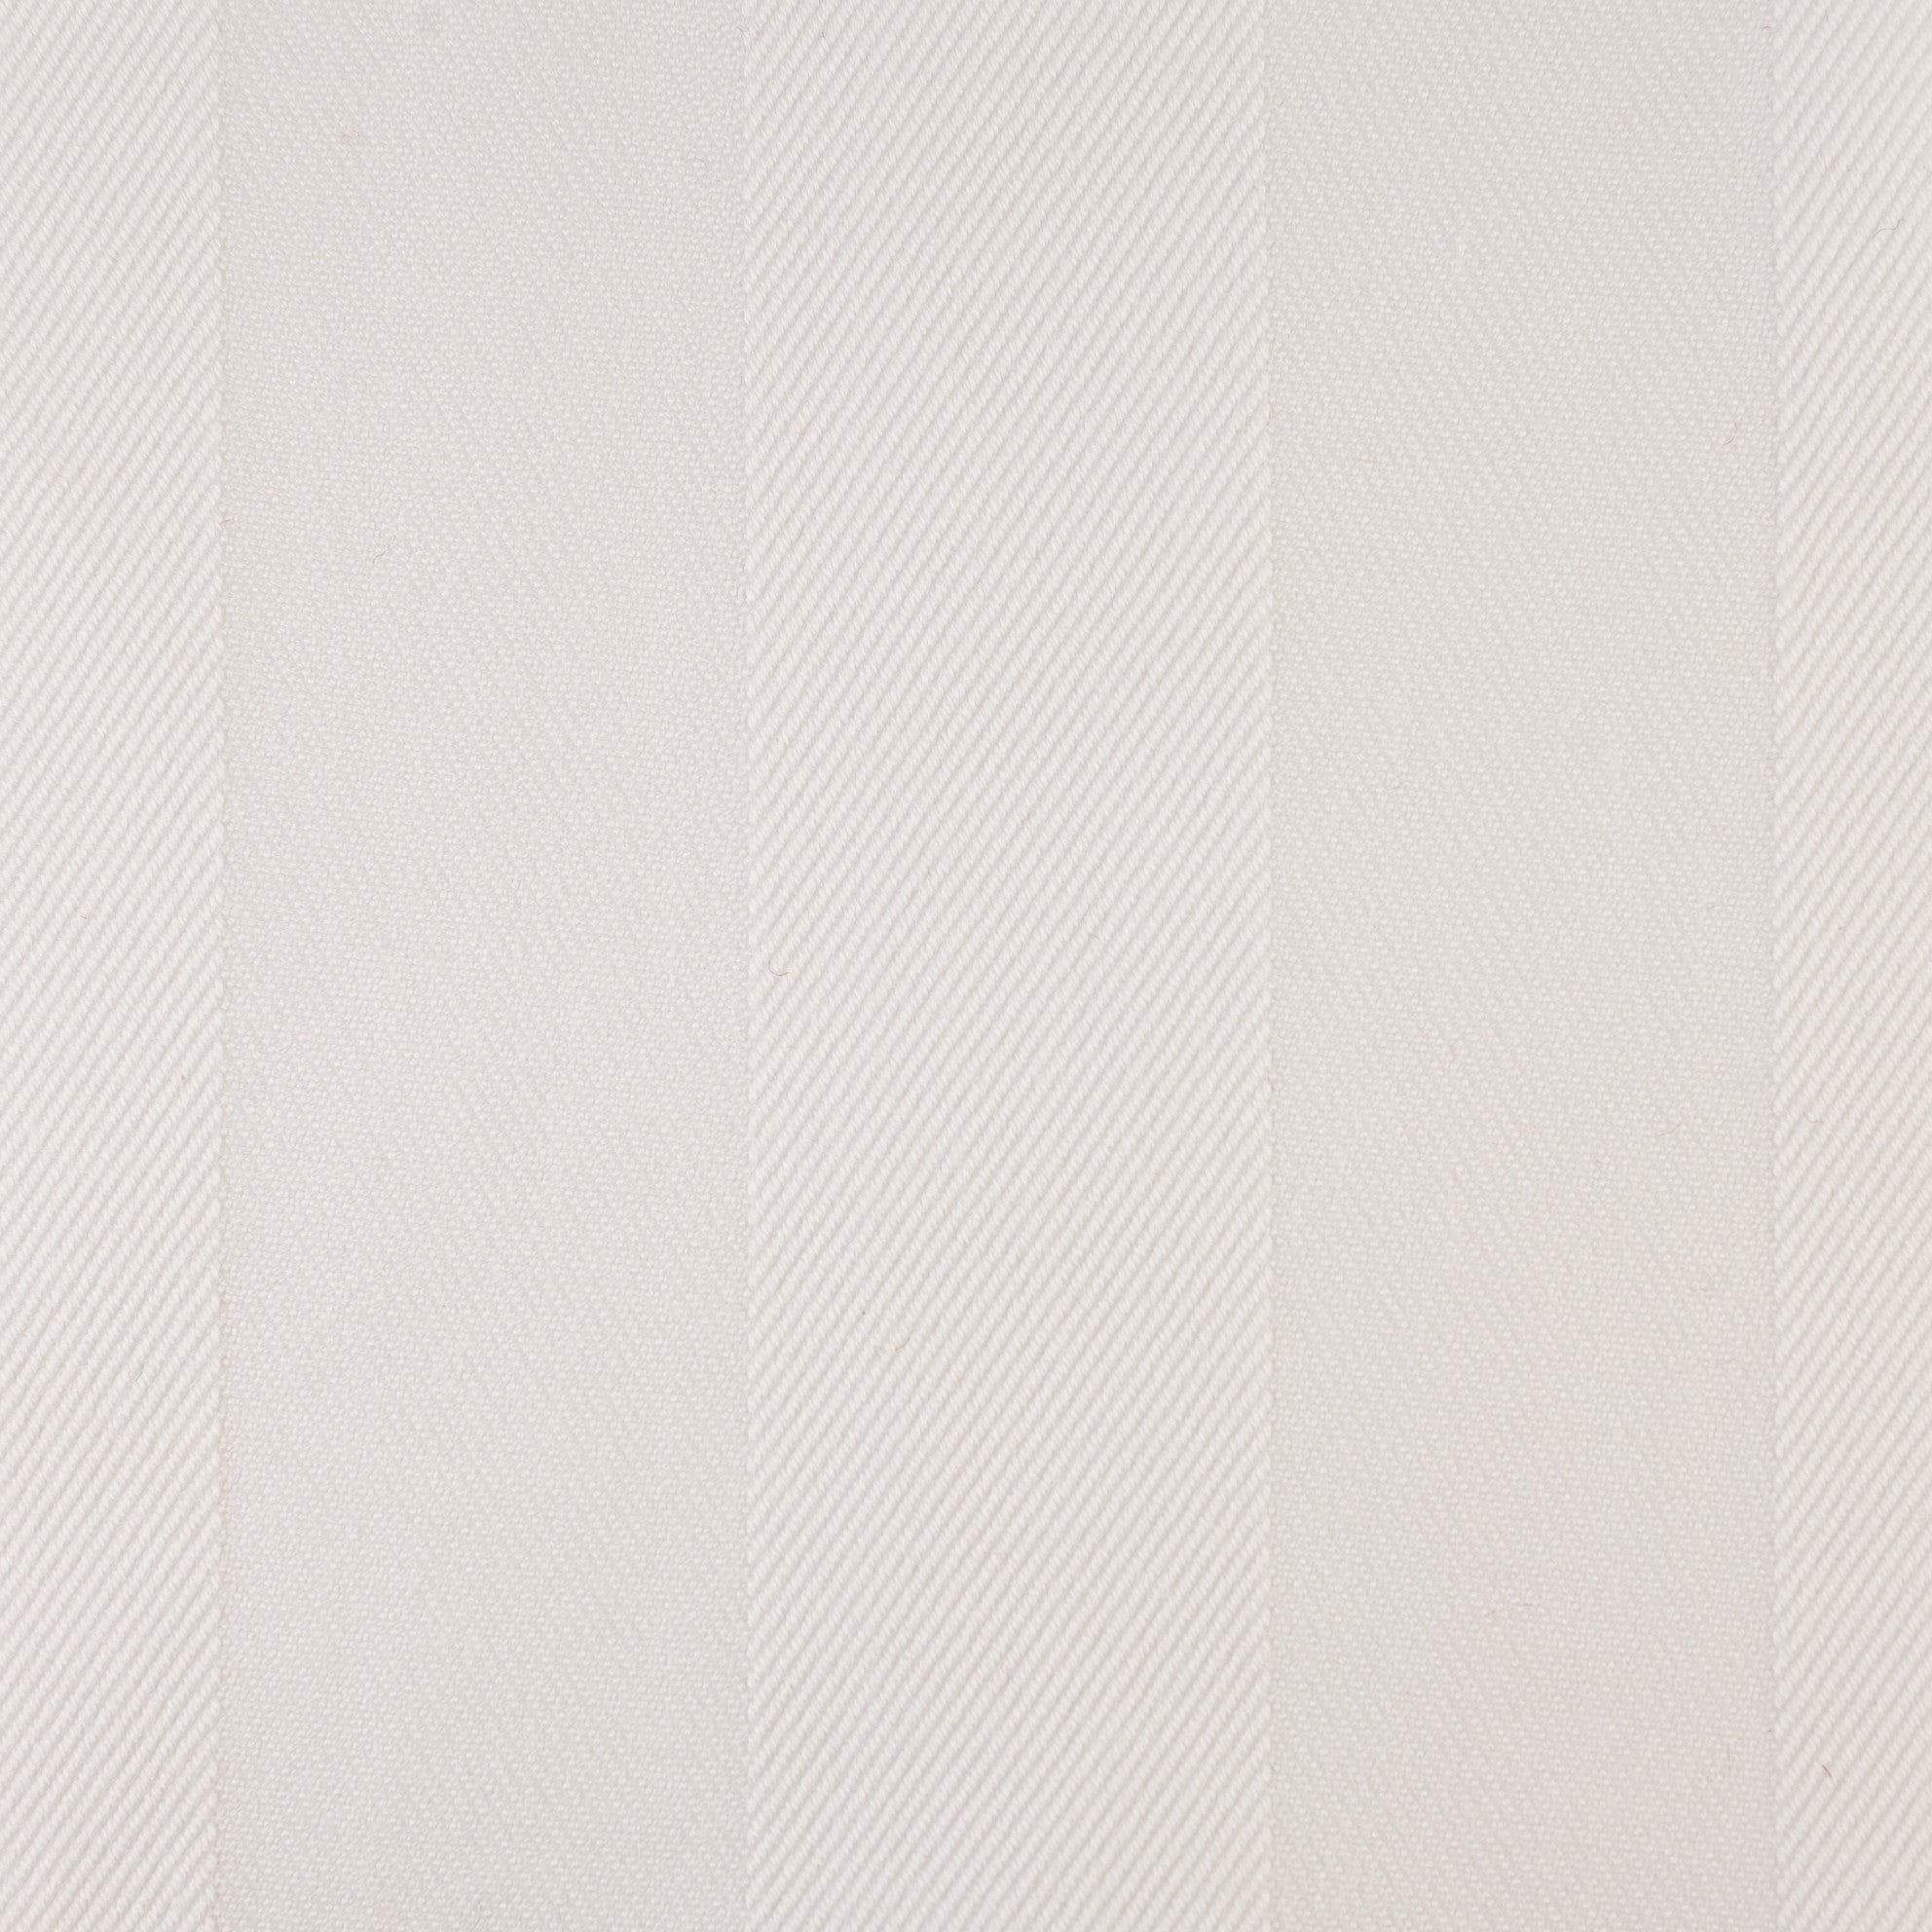 Woven Striped Fabric - Cromer 07/001 Arctic White | Nicholas Engert Interiors